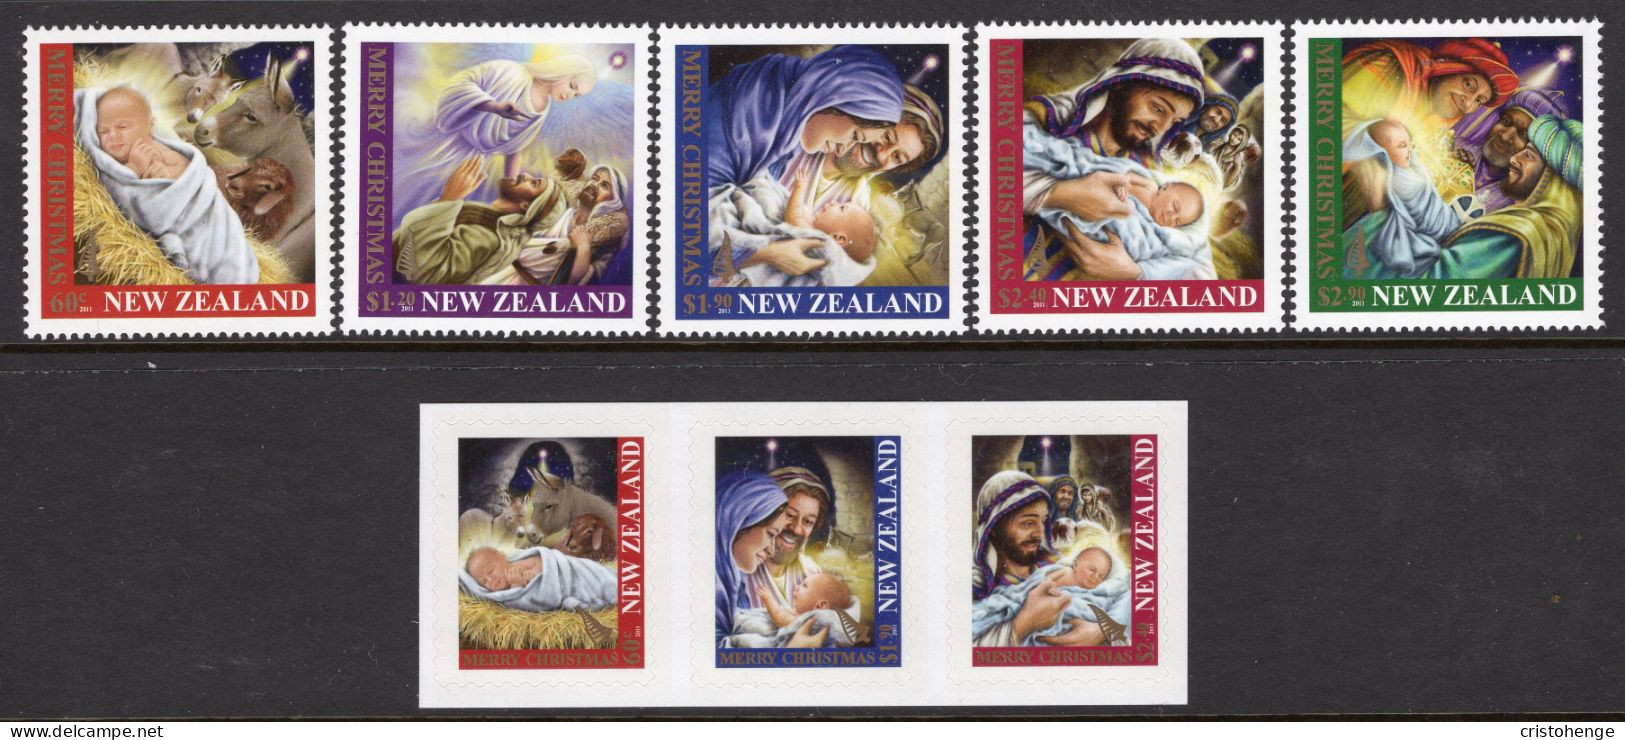 New Zealand 2011 Christmas Set MNH (SG 3321-3328) - Unused Stamps